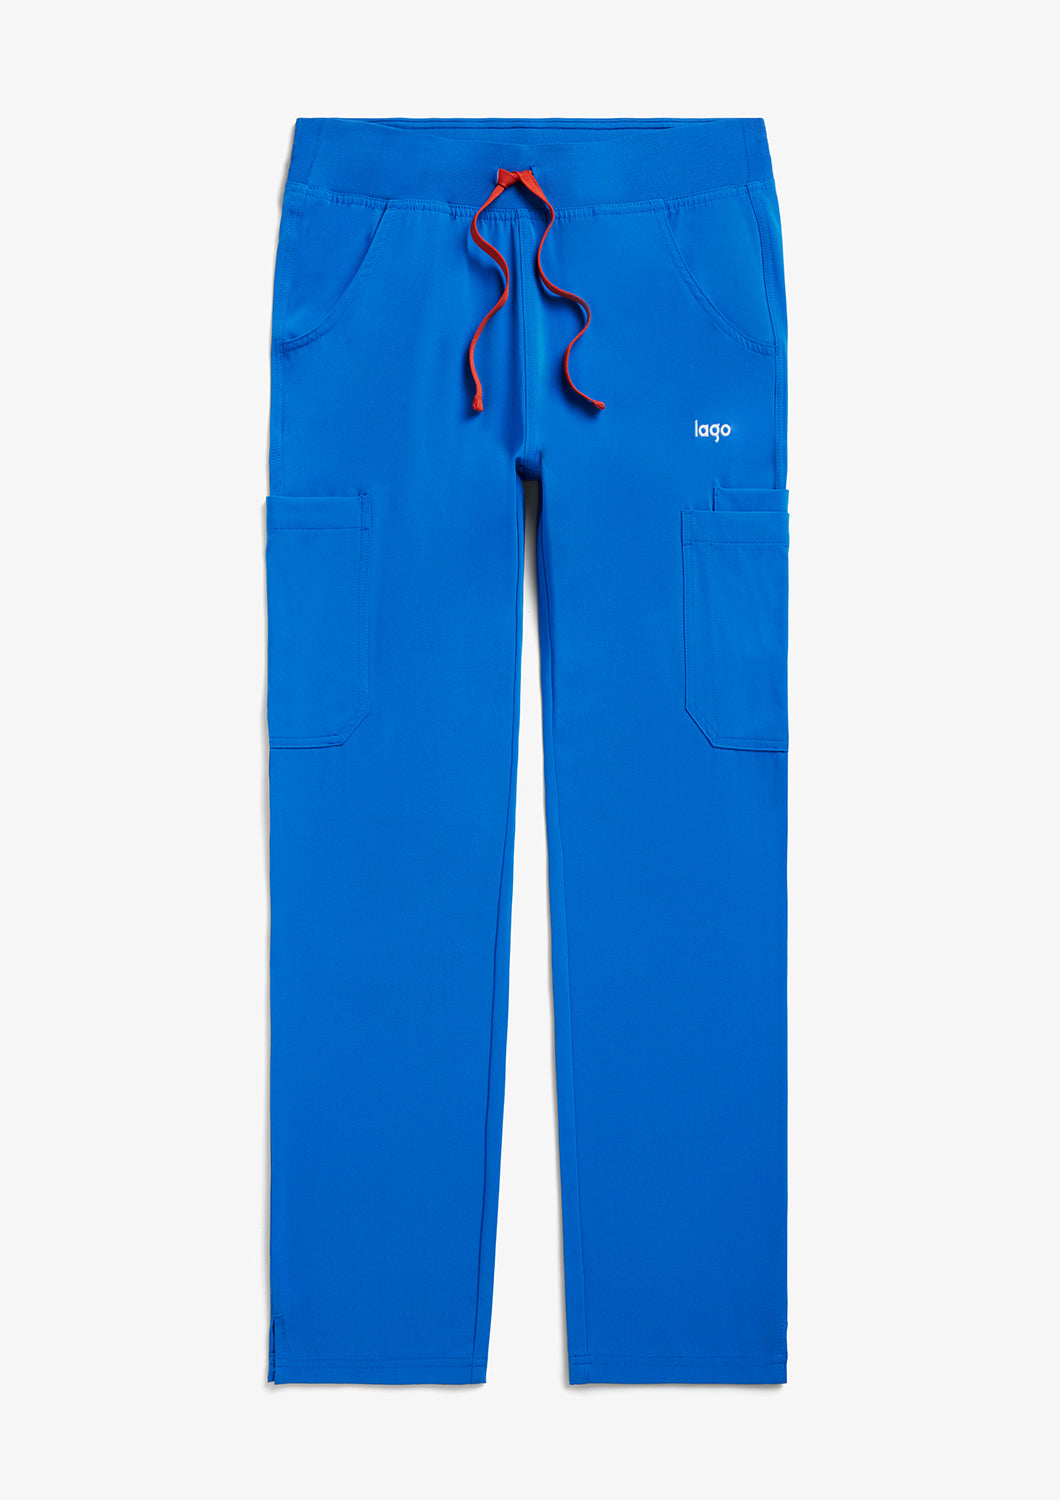 Union Pants - Royal Blue